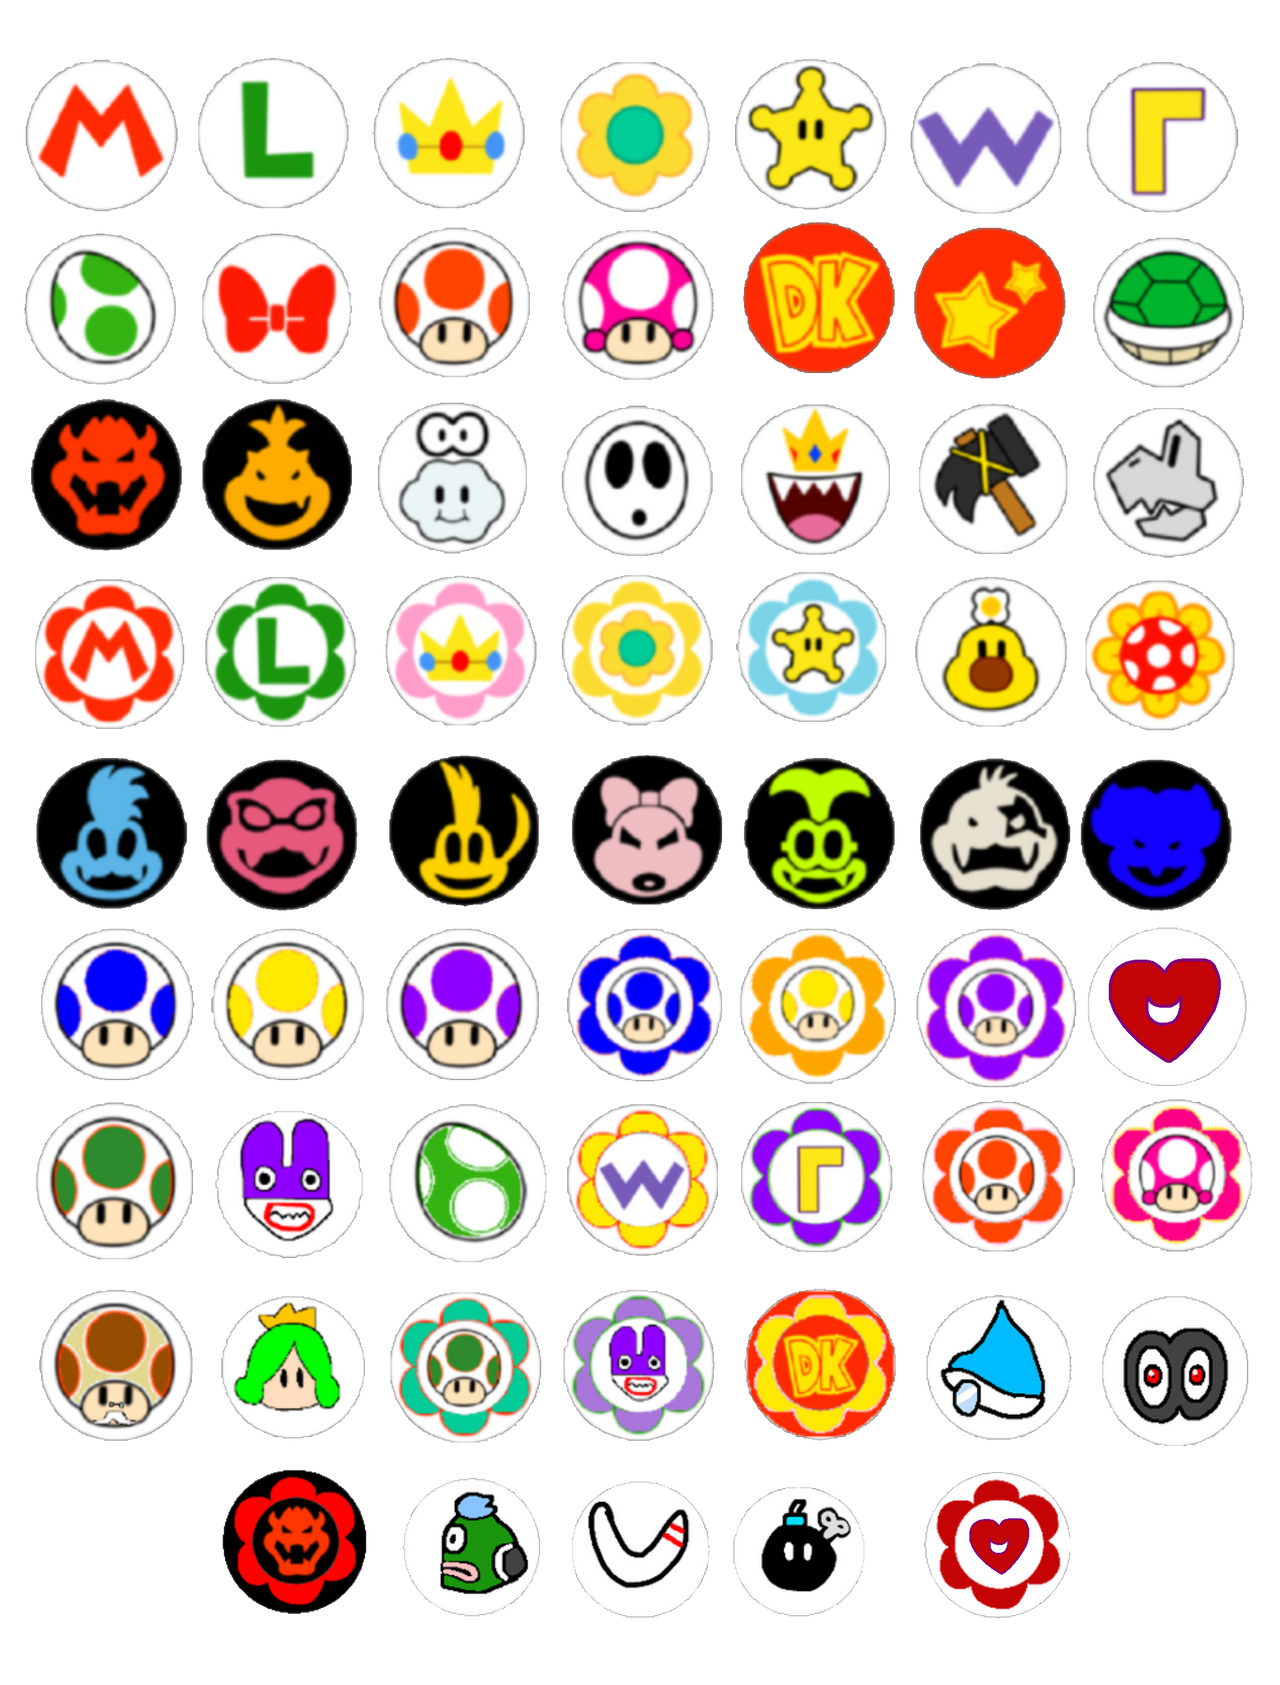 Super Mario Bros. All Character Emblems by Joshuat1306 on DeviantArt